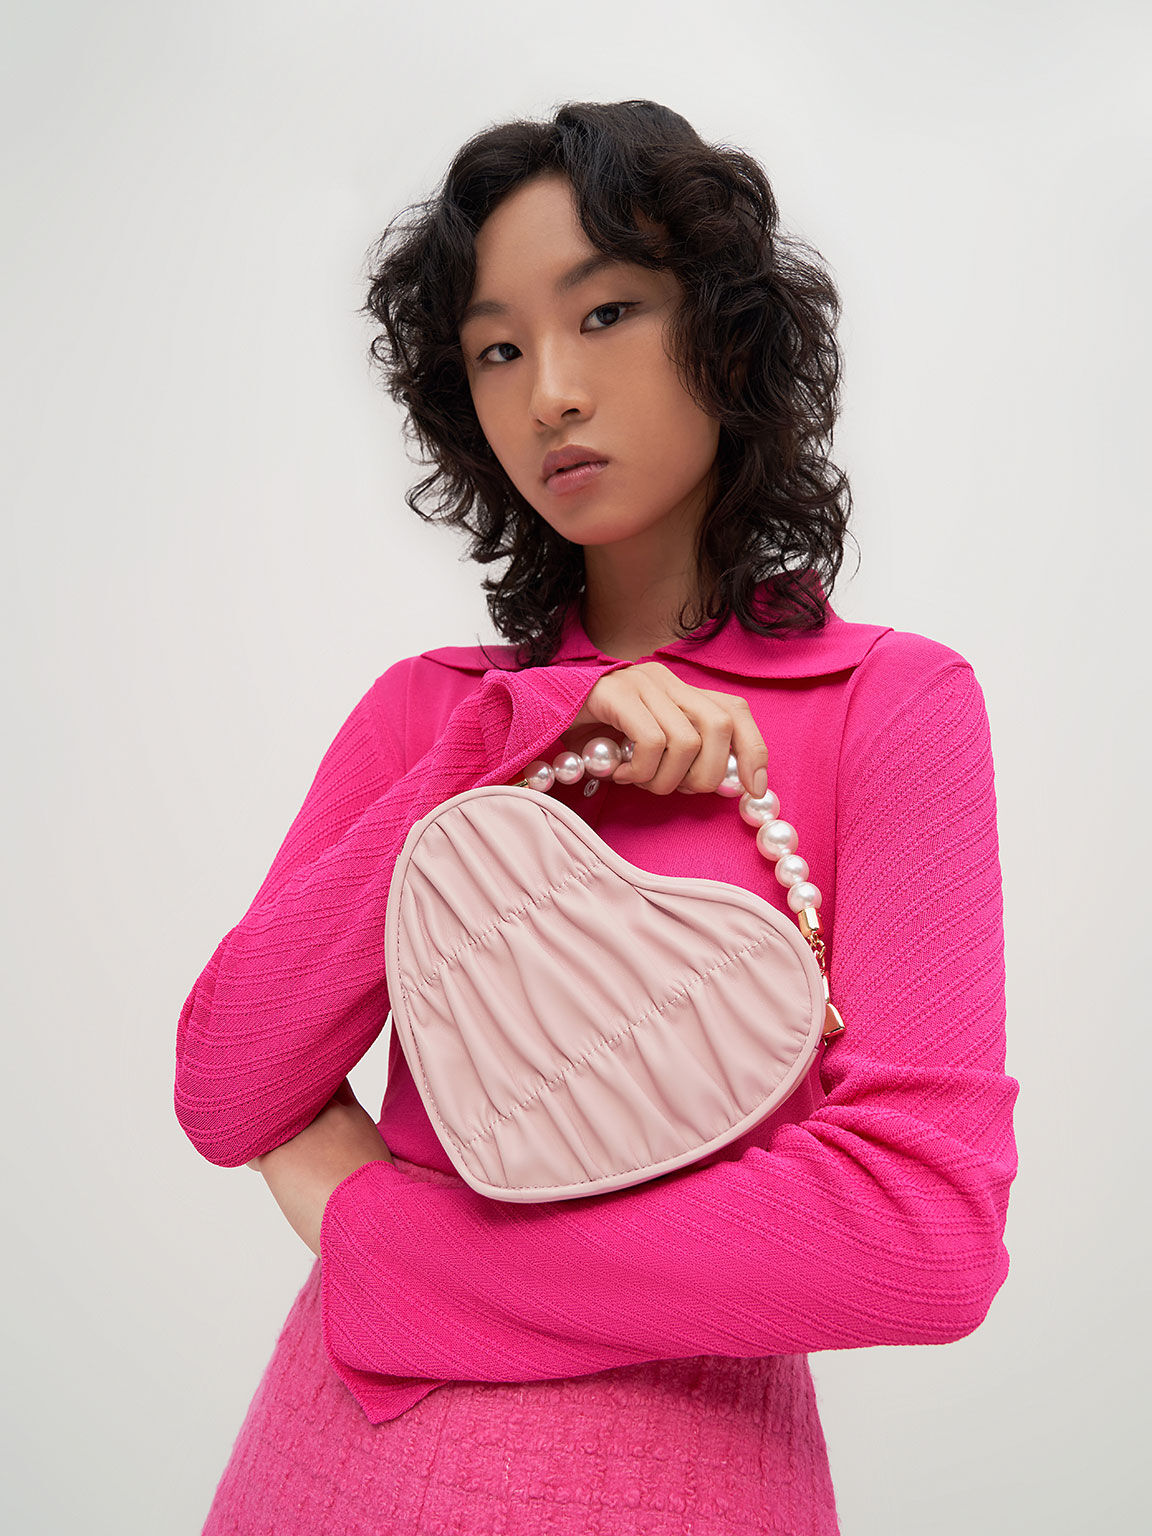 Pink Ashby Raffia Curved Handle Bag - CHARLES & KEITH BH